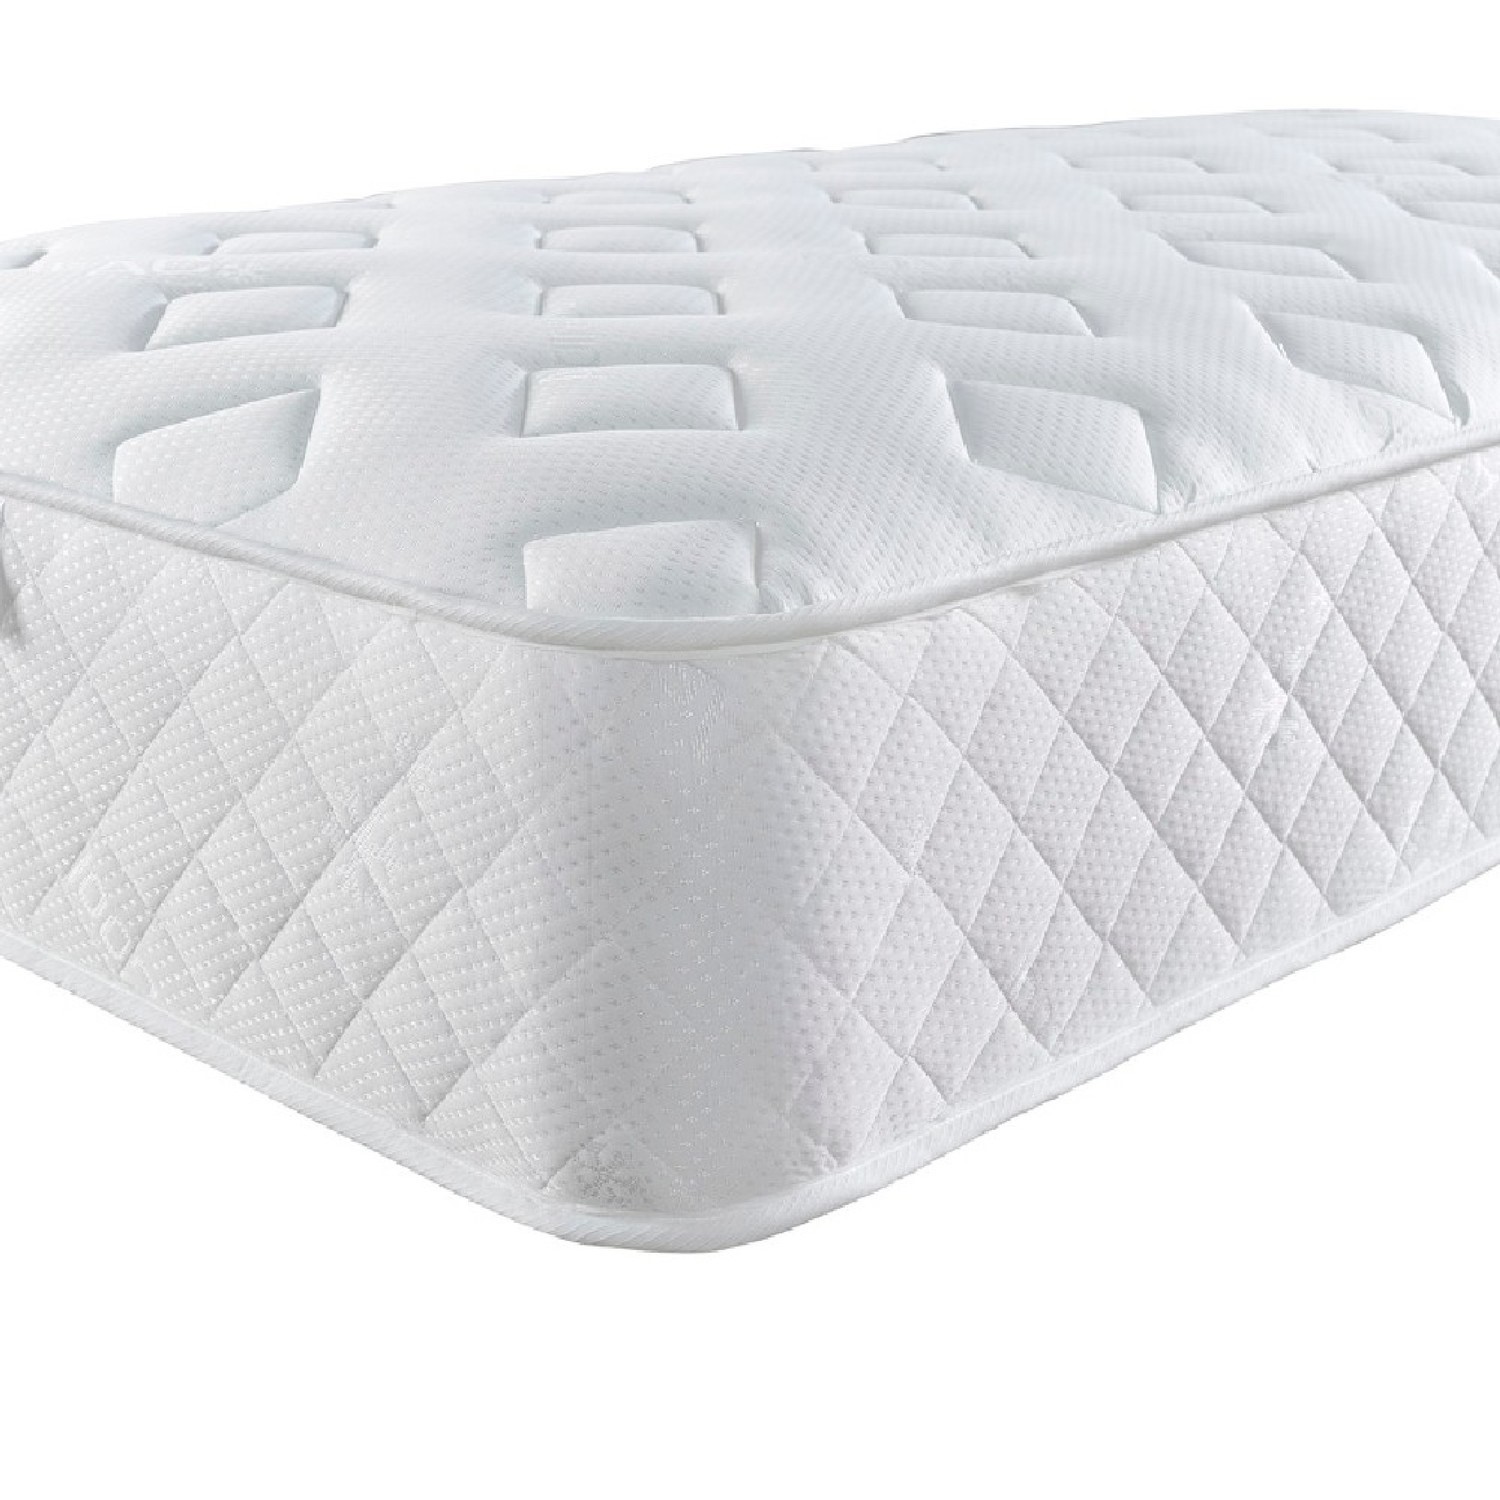 Aspire furniture comfort eco hybrid memory foam & spring mattress - single